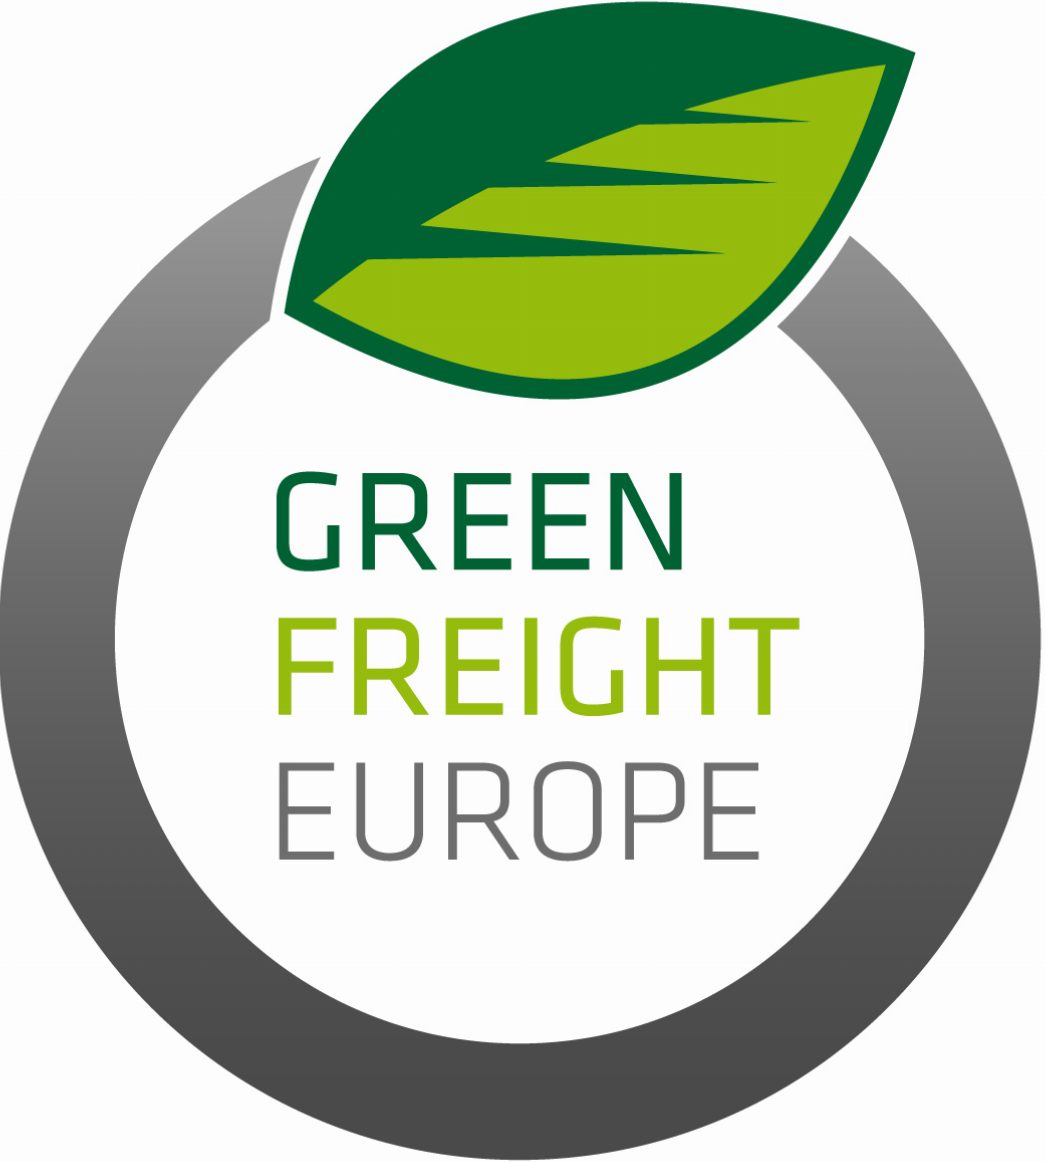 greenfreight logo e